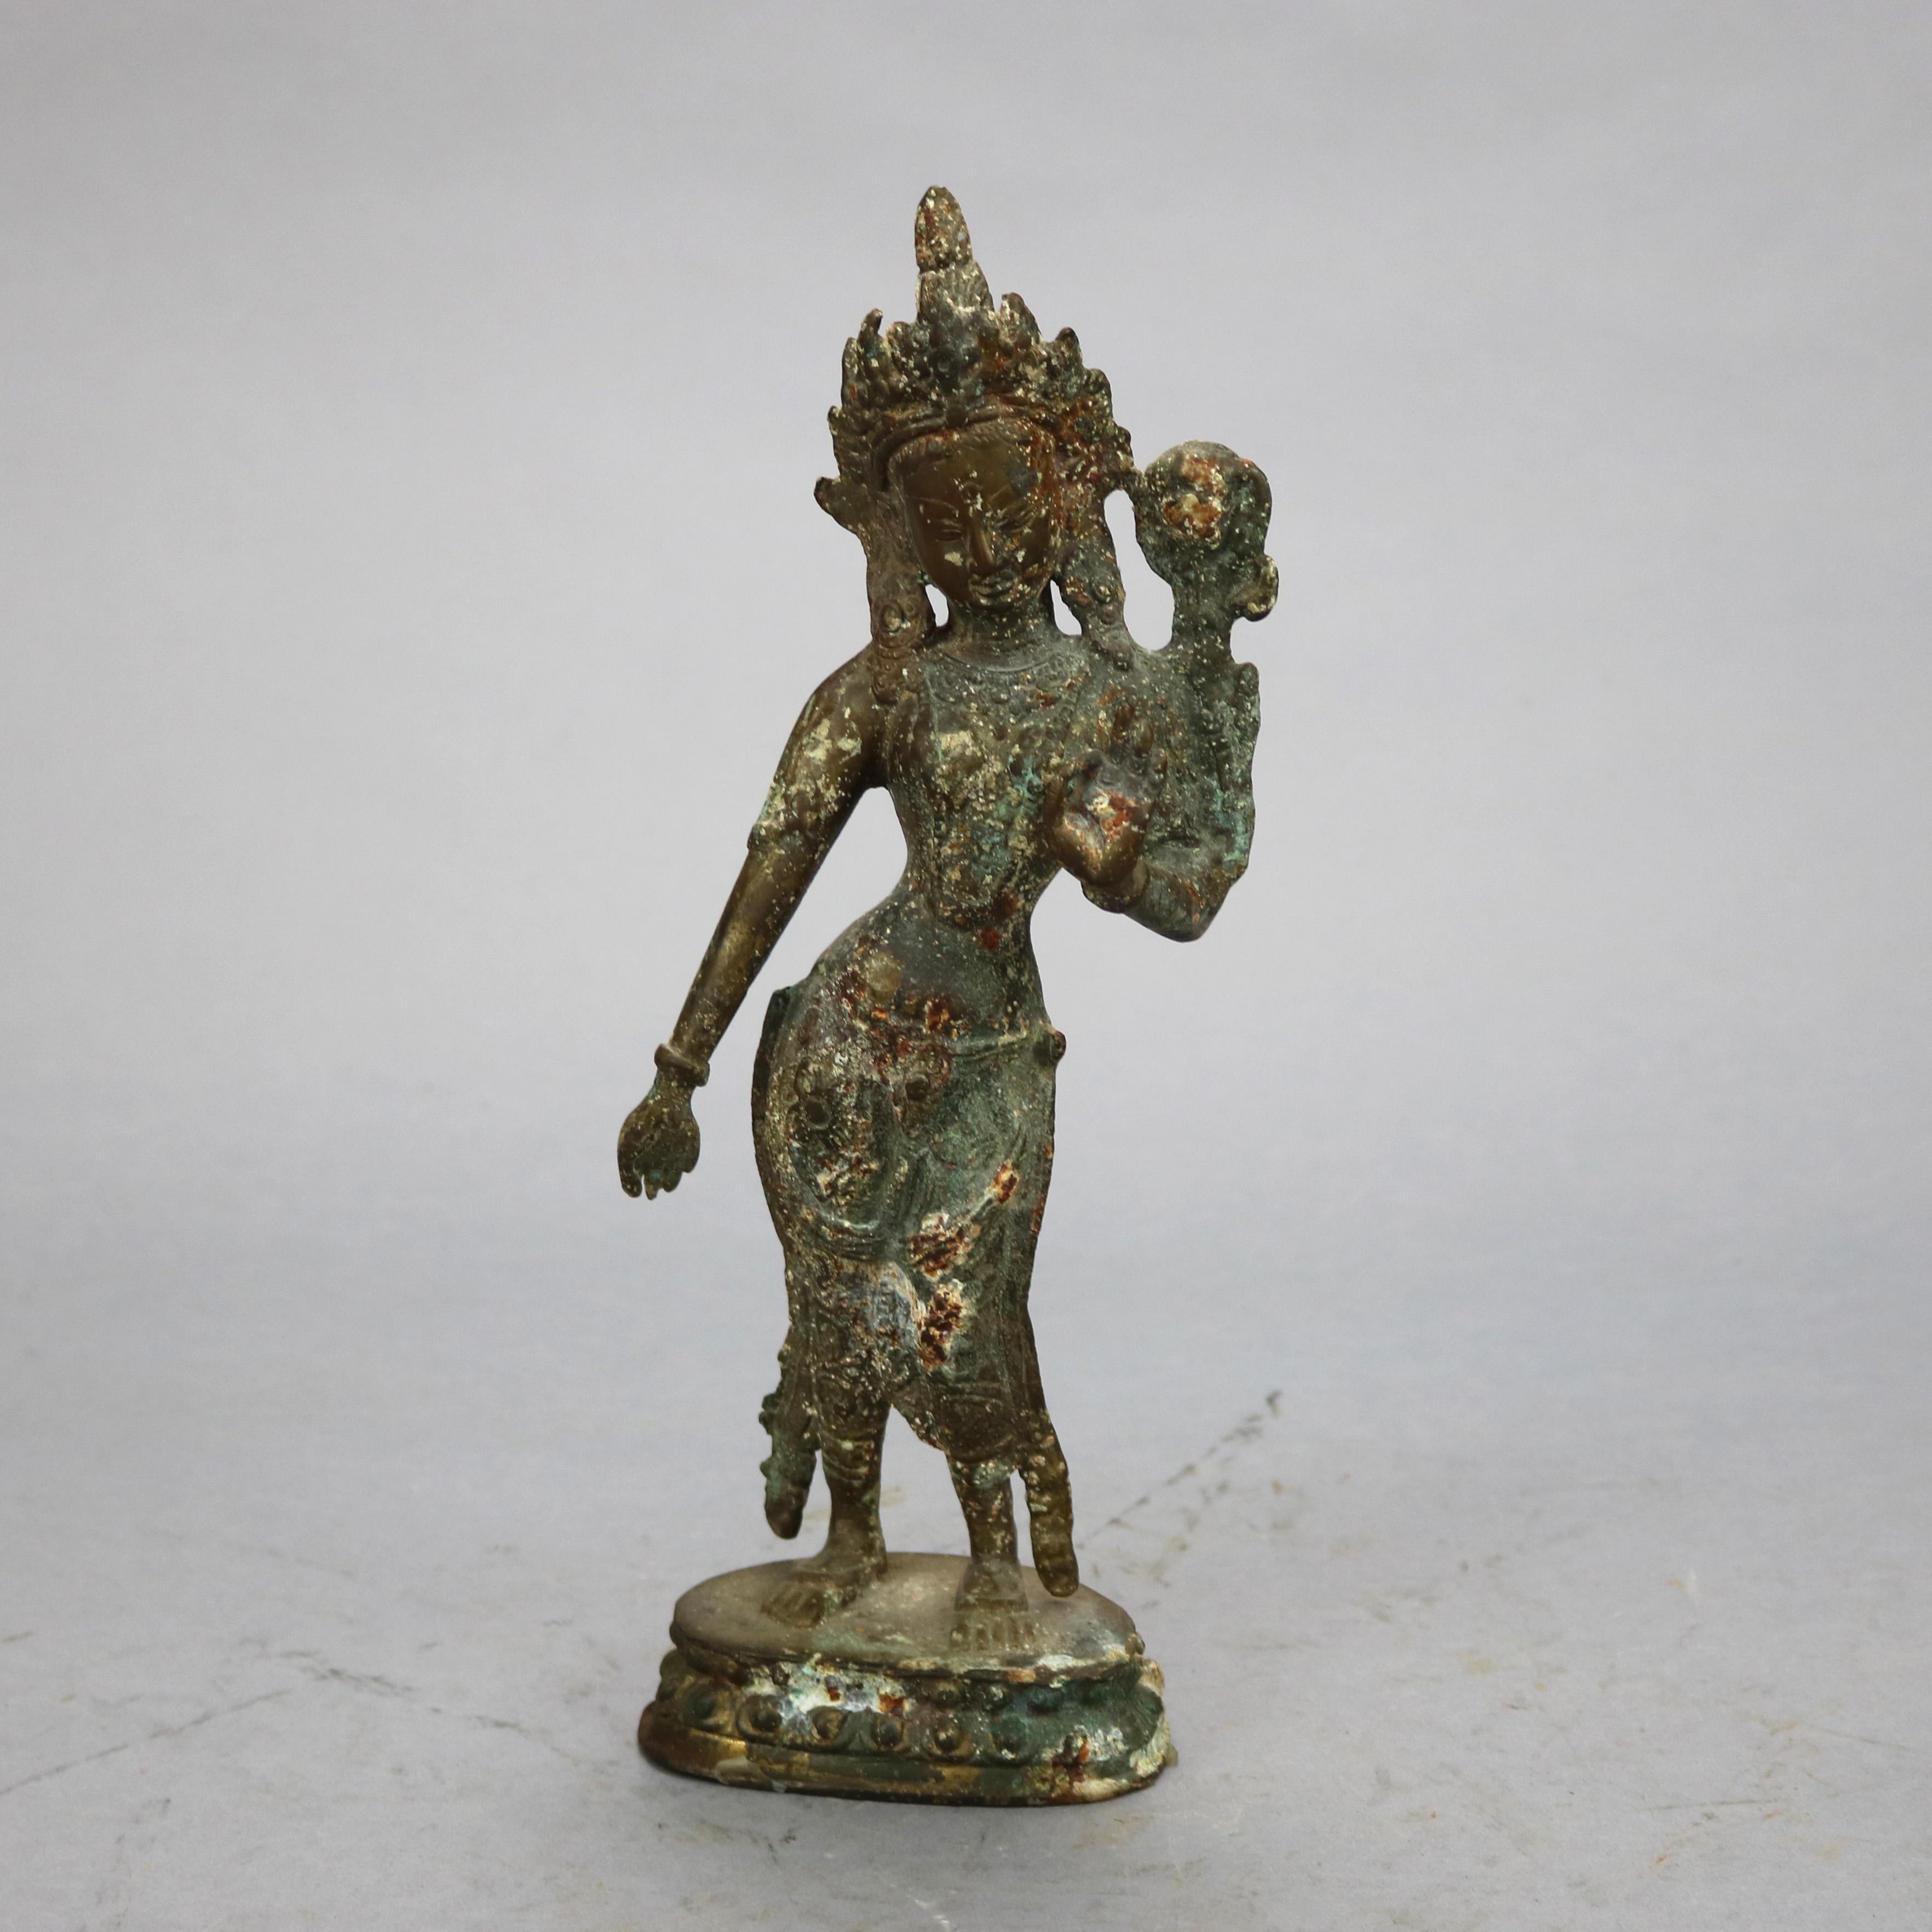 A Tibetan cast bronze dancing Shiva Buddha sculpture, 20th century

Measures - 12'' H x 4.25'' W x 3'' D.